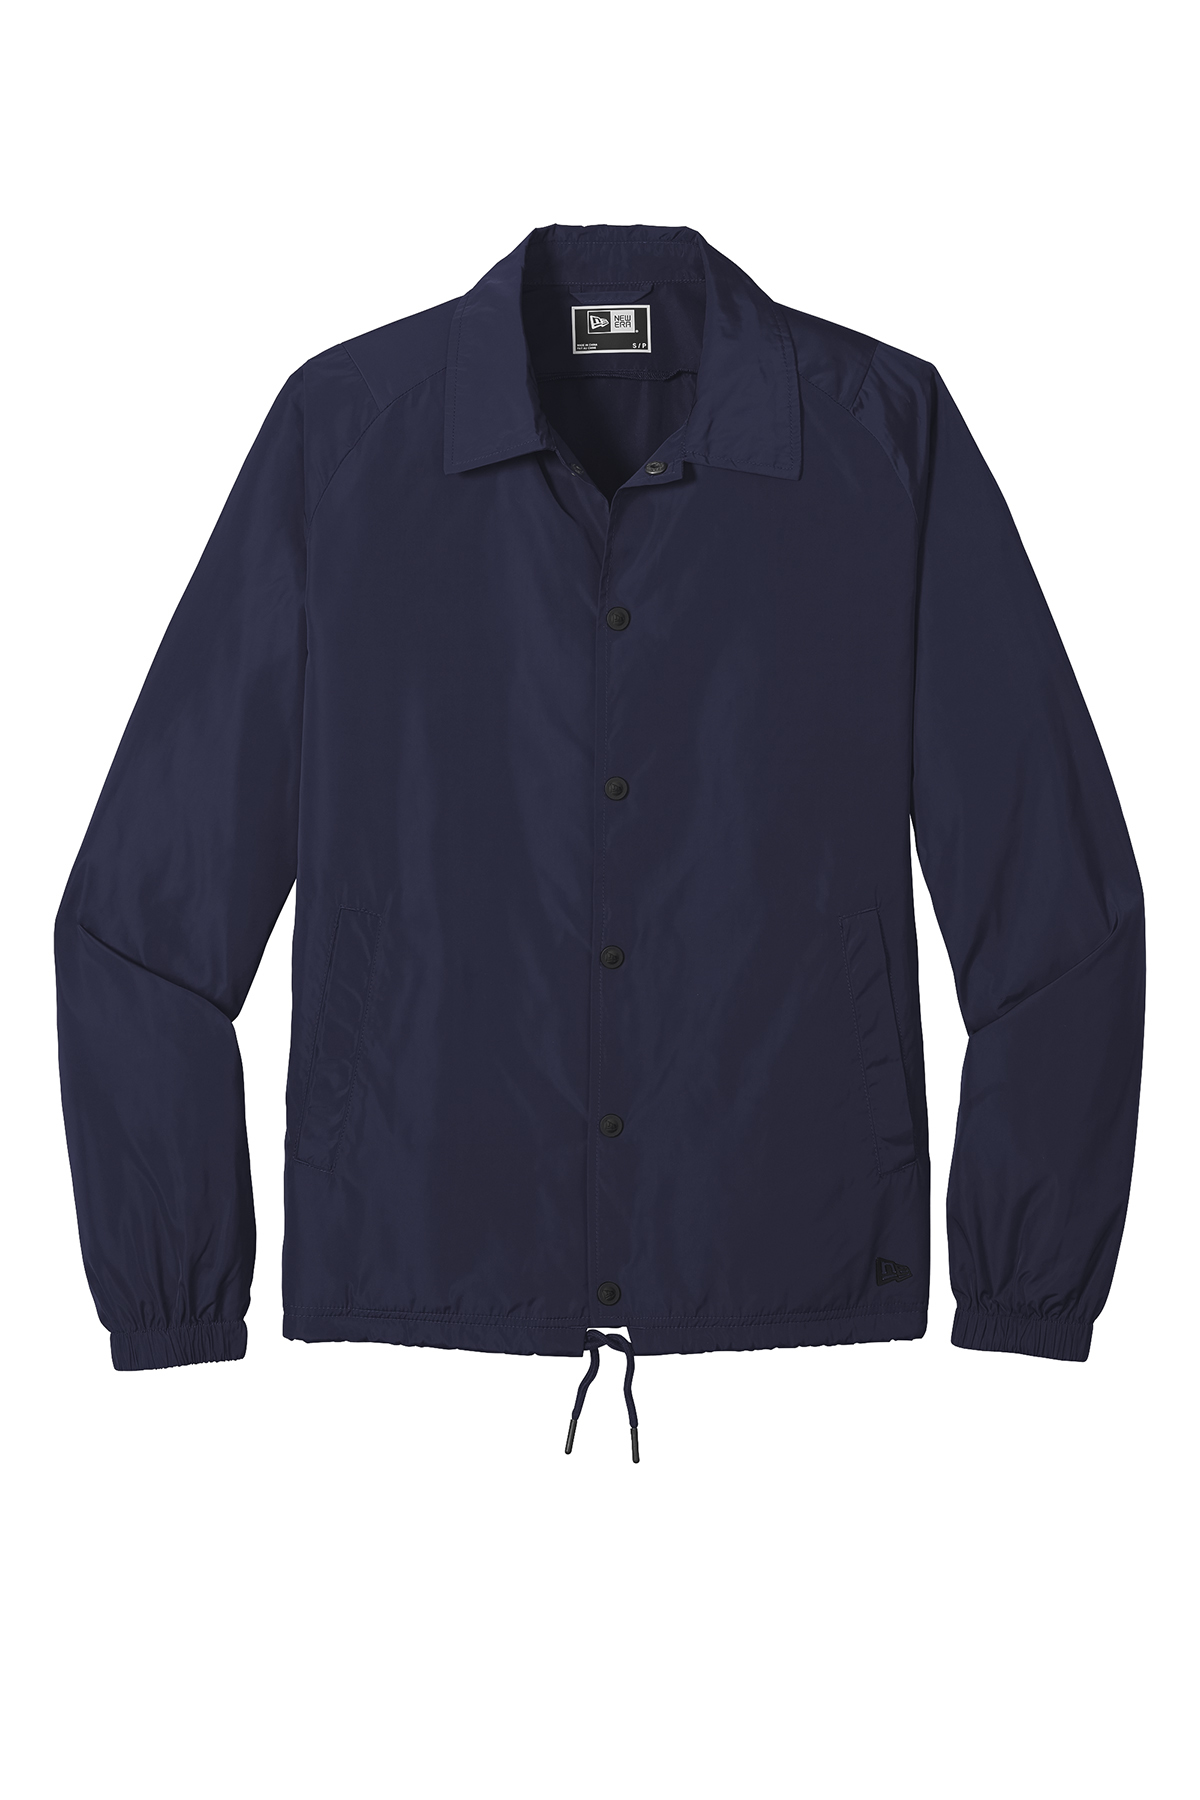 New Era Coaches Jacket | Product | SanMar